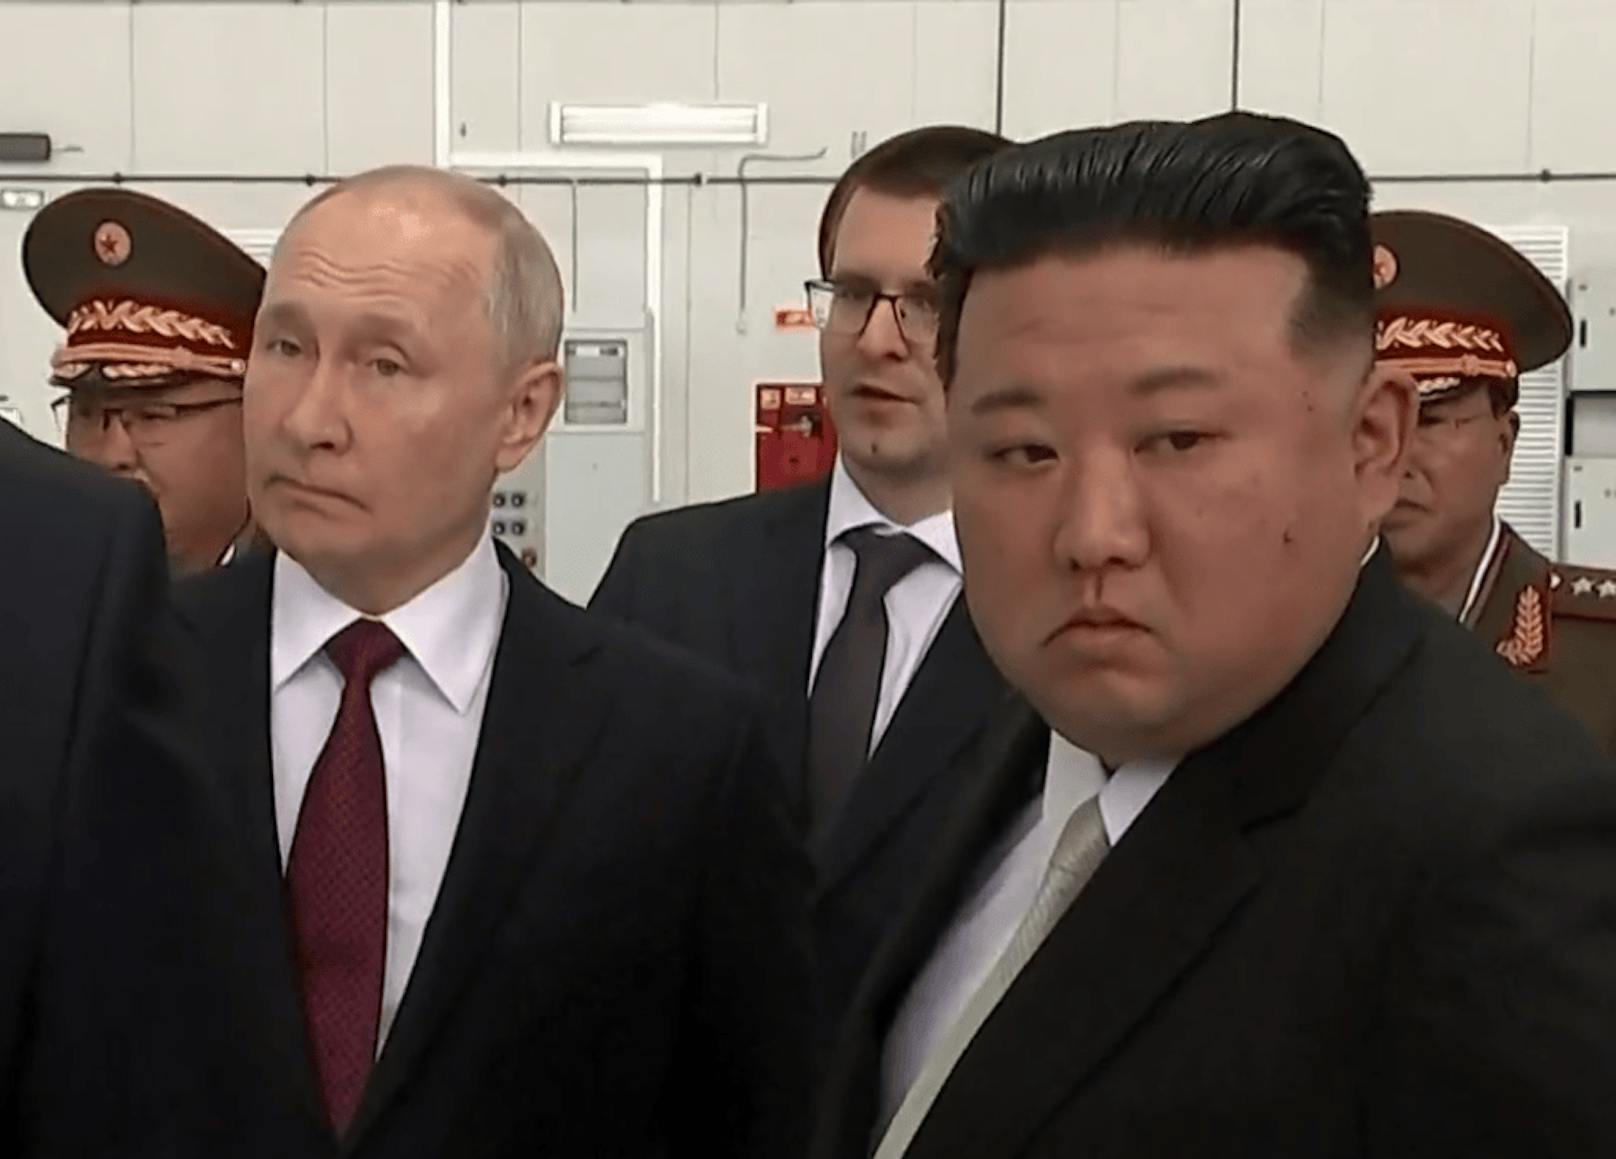 Putin empfängt Kim Jong-un im Weltraumbahnhof